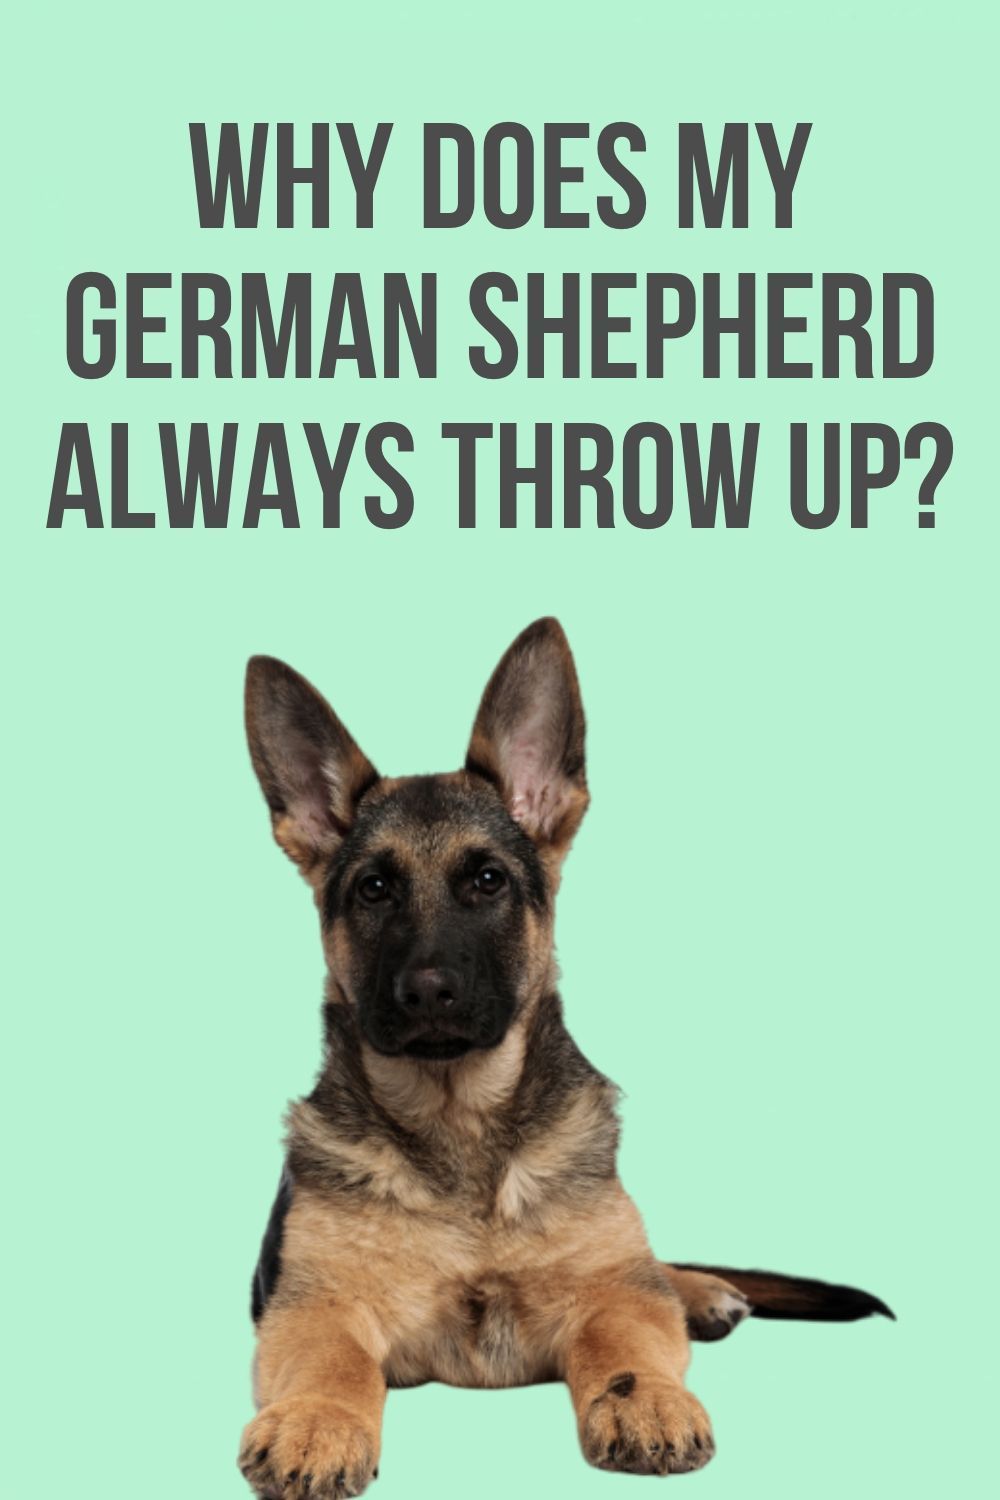 Why does my German Shepherd always throw up?